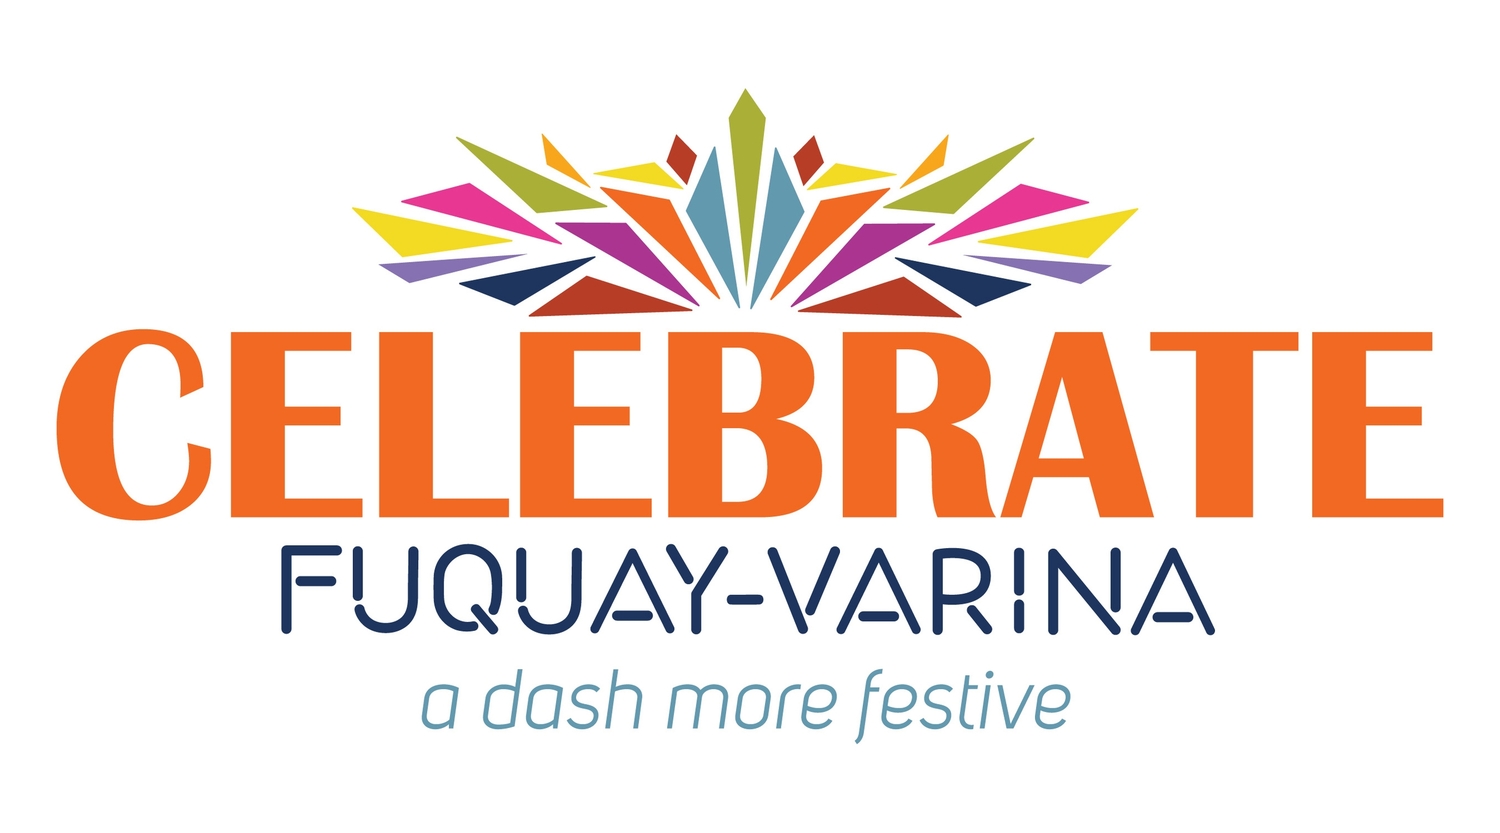 Celebrate Fuquay-Varina